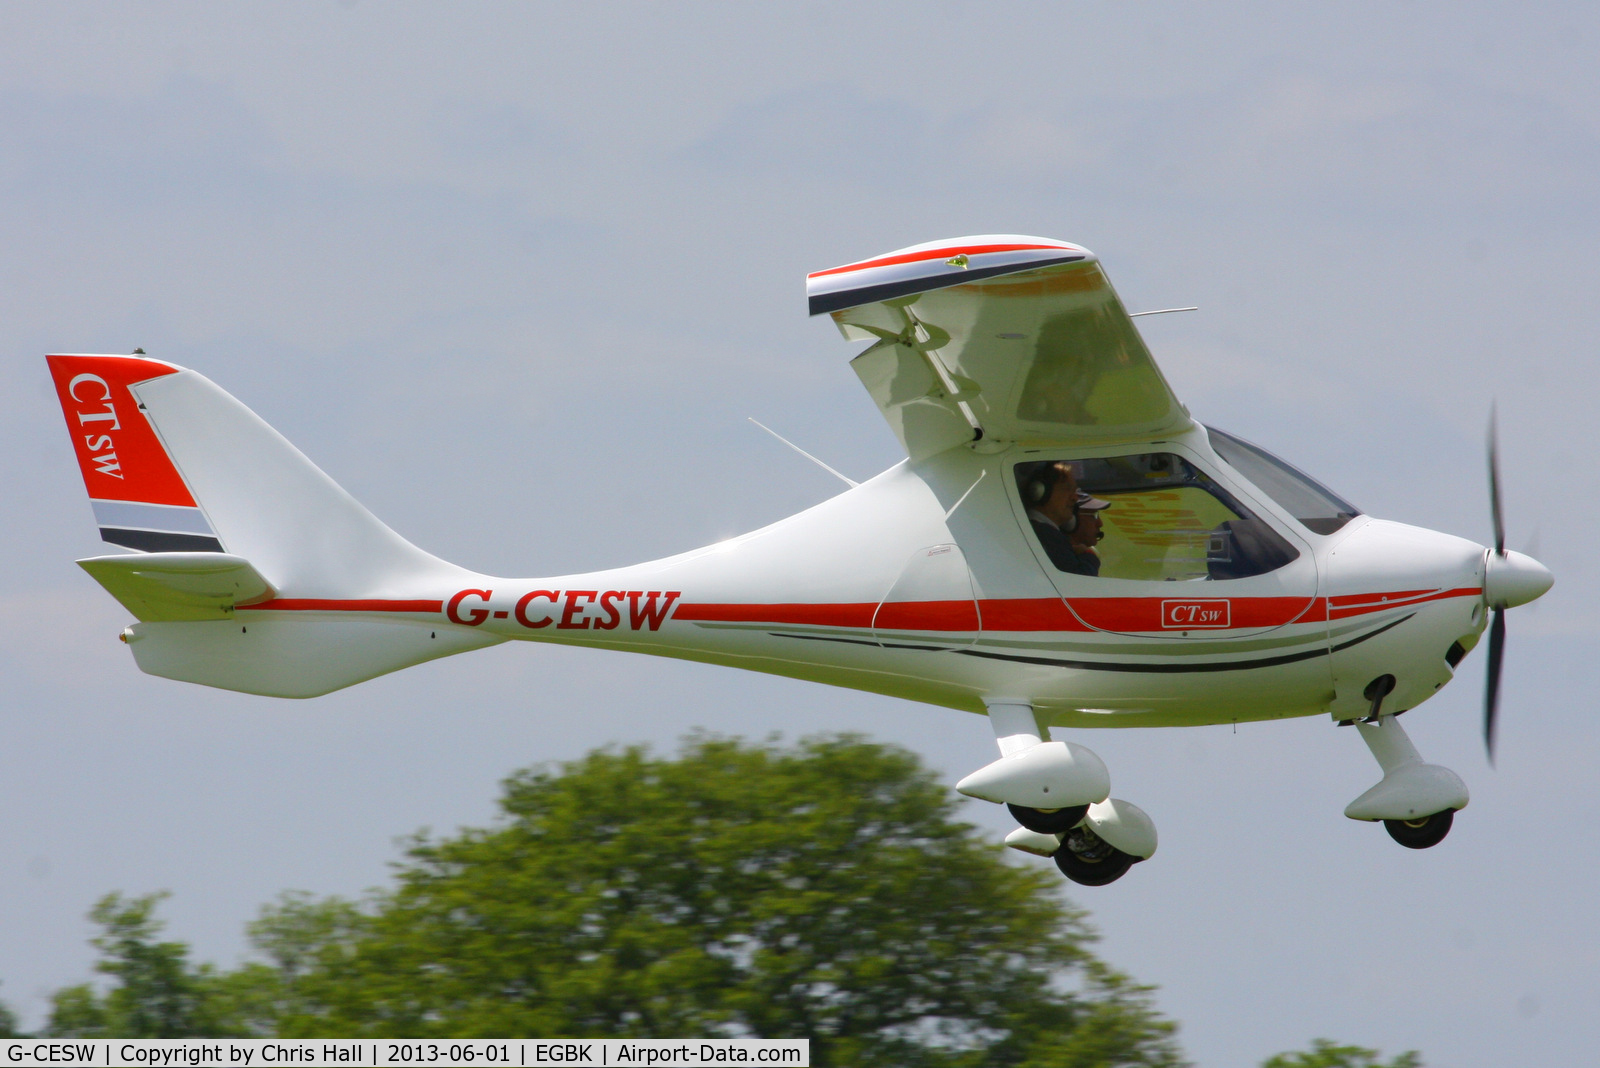 G-CESW, 2007 Flight Design CTSW C/N 8296, at AeroExpo 2013